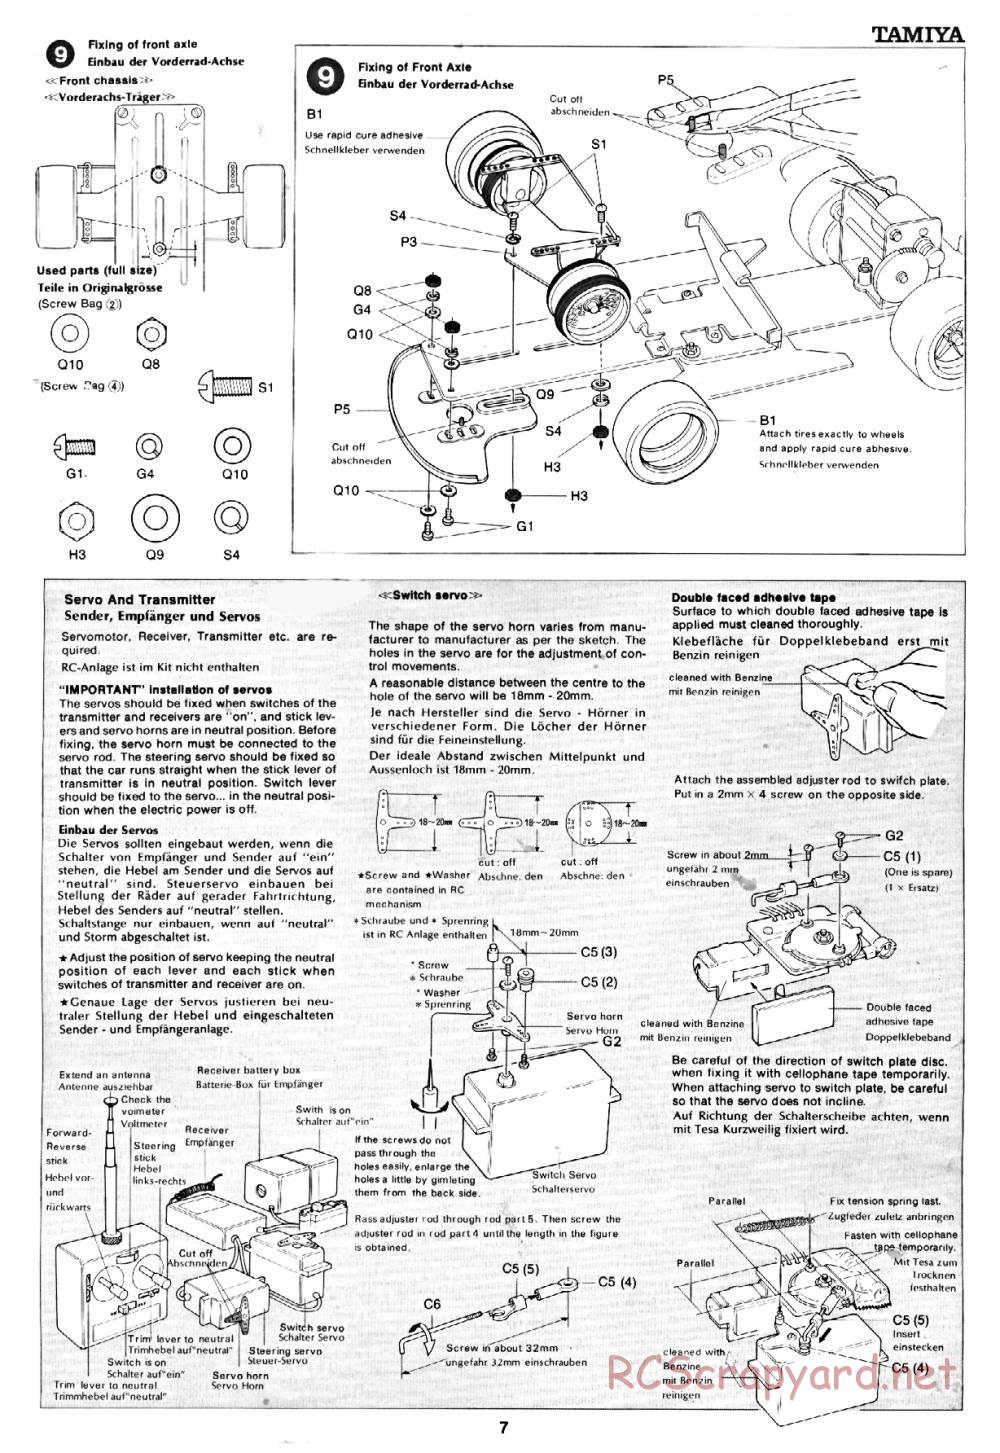 Tamiya - Martini Porsche 935 Turbo - 58002 - Manual - Page 7